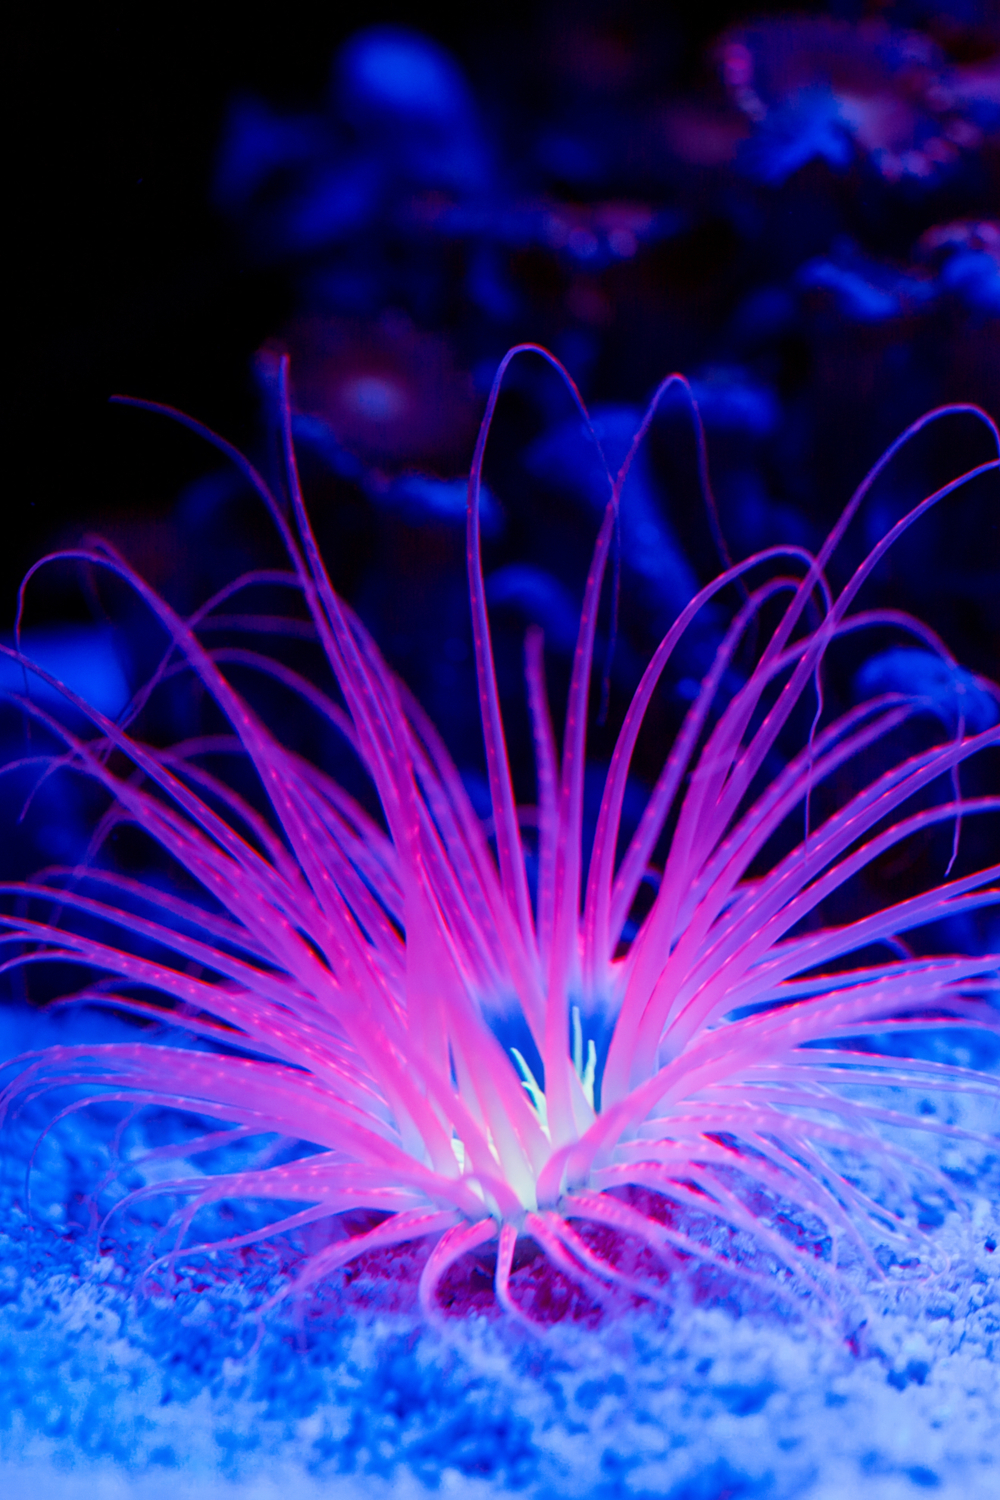 Sea Anemone Habits and biology